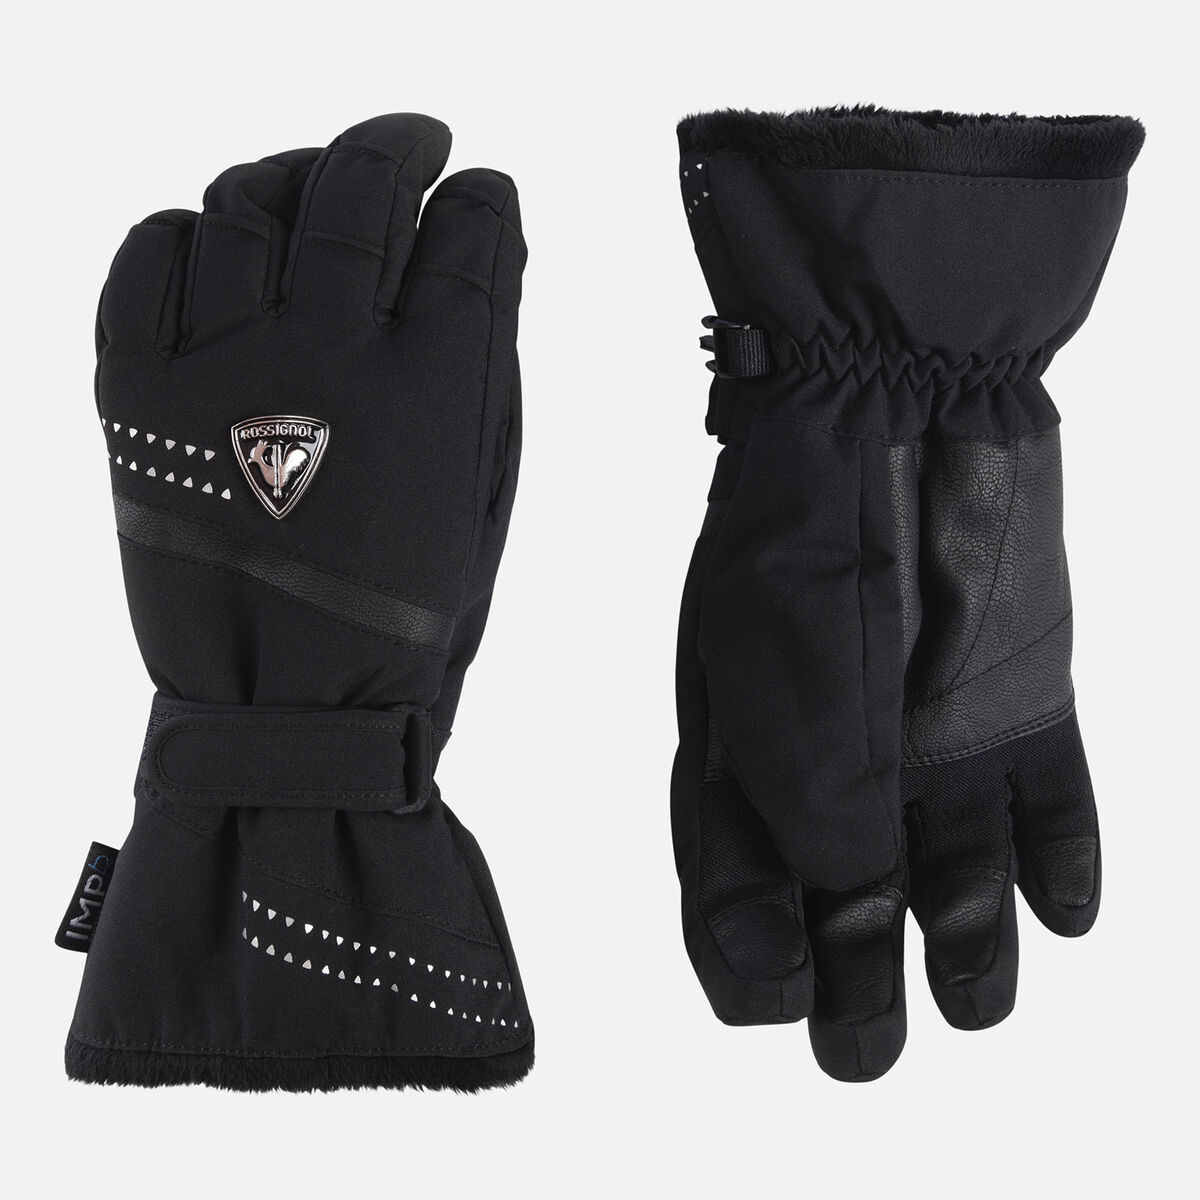 Rossignol Women's Nova waterproof ski gloves Black